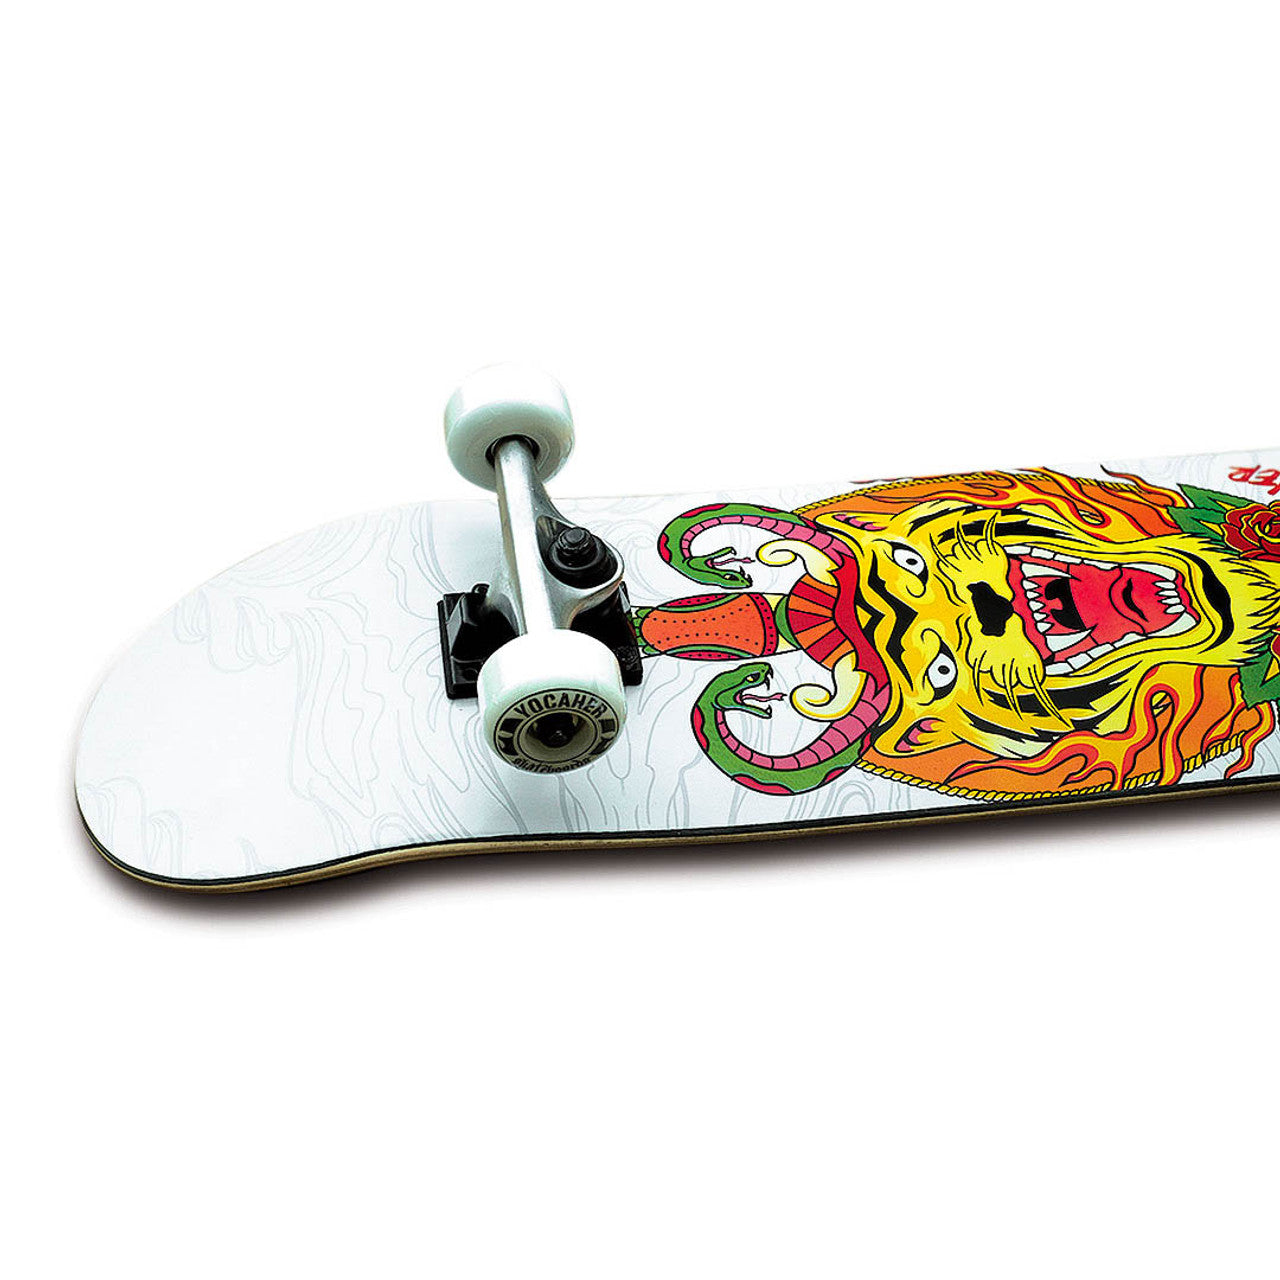 Yocaher Complete Skateboard 7.75" - Flaming Tiger